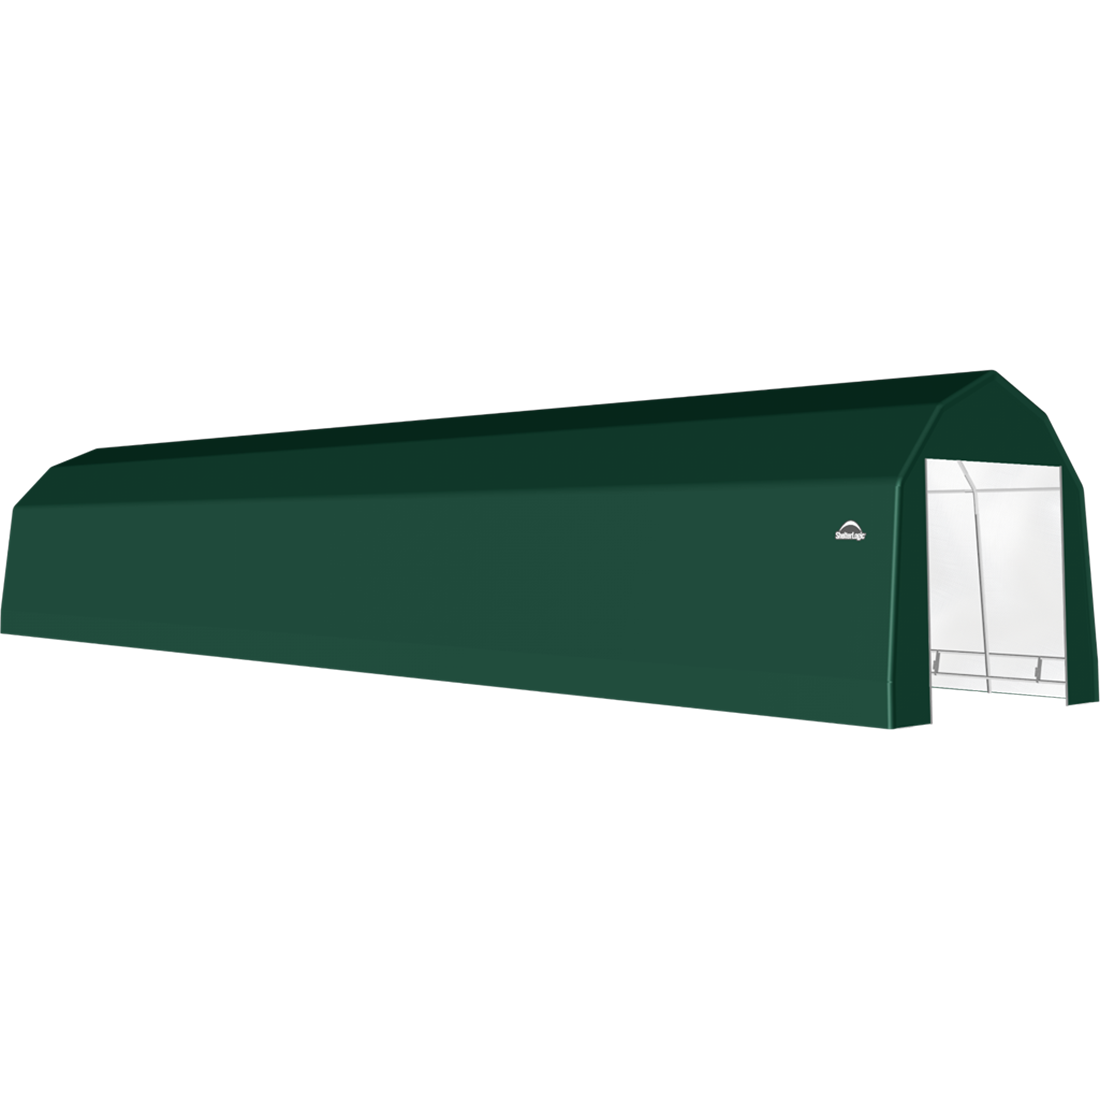 ShelterTech SP Series Barn Shelter, 12 ft. x 56 ft. x 11 ft. Heavy Duty PVC 14.5 oz. Green